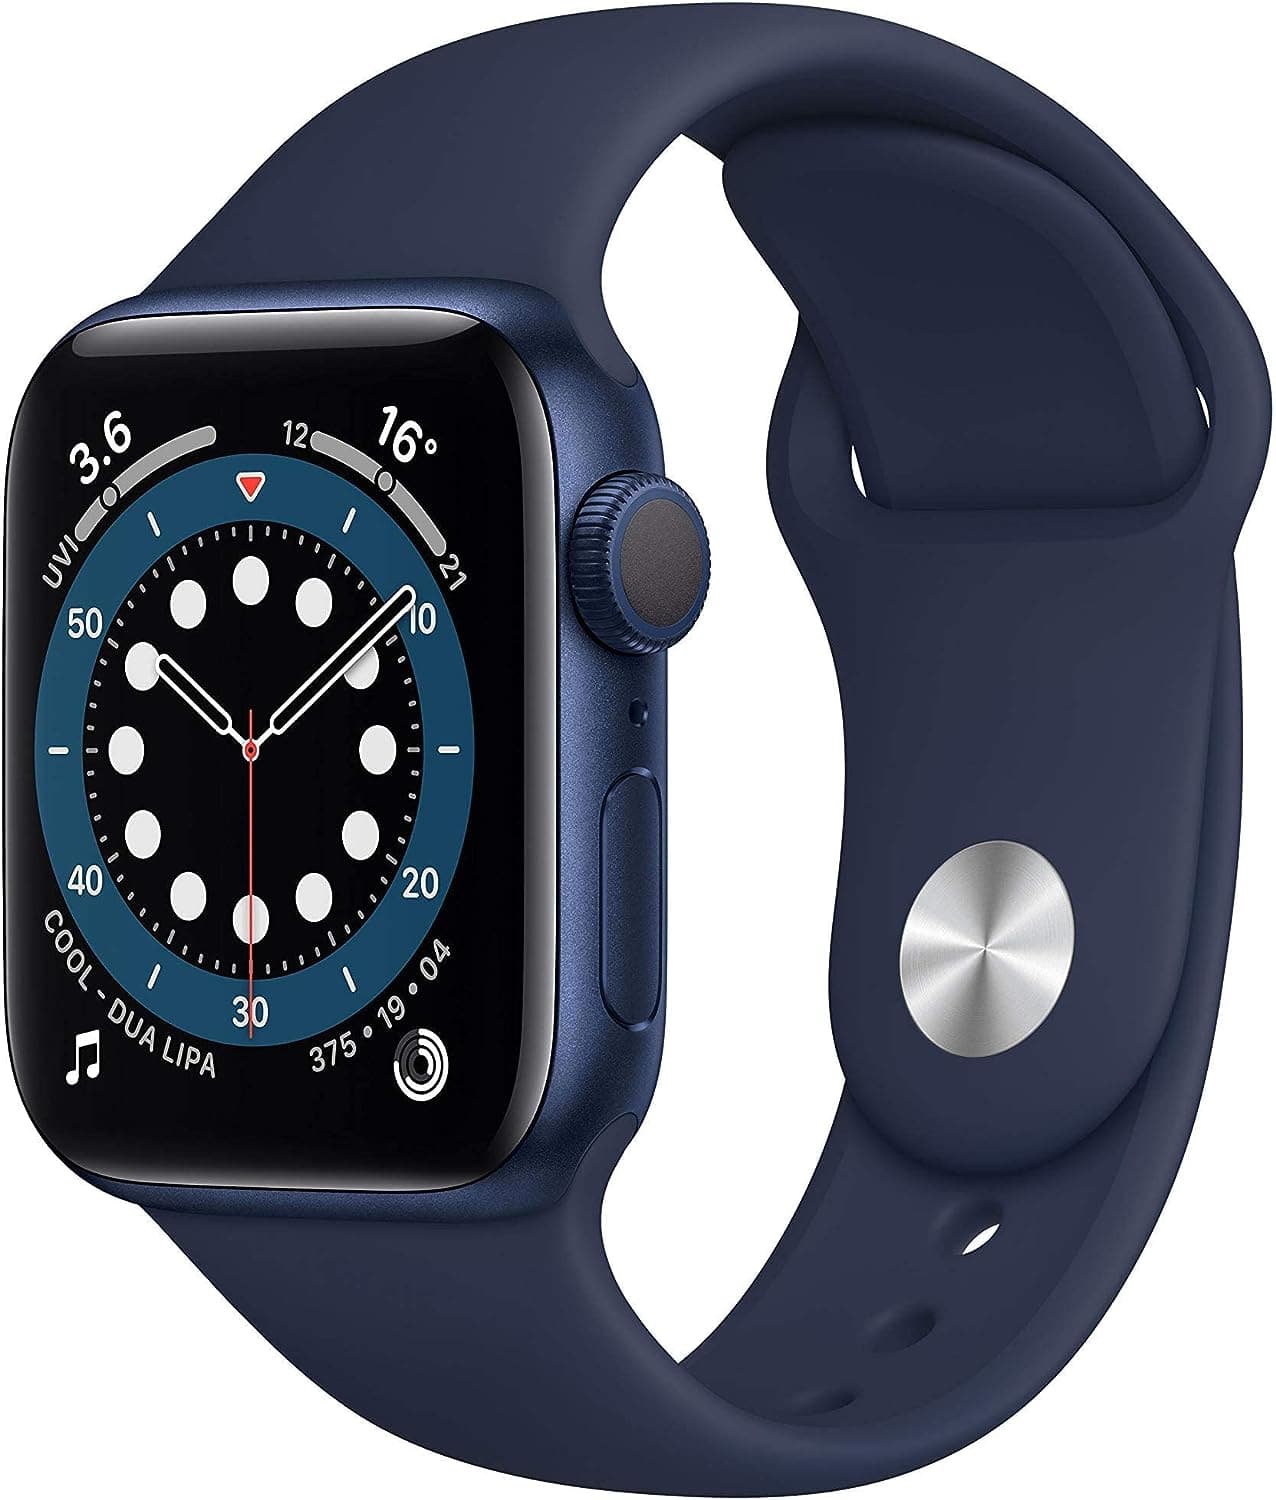 Apple Watch Series 5 GPS - ur.co.uk